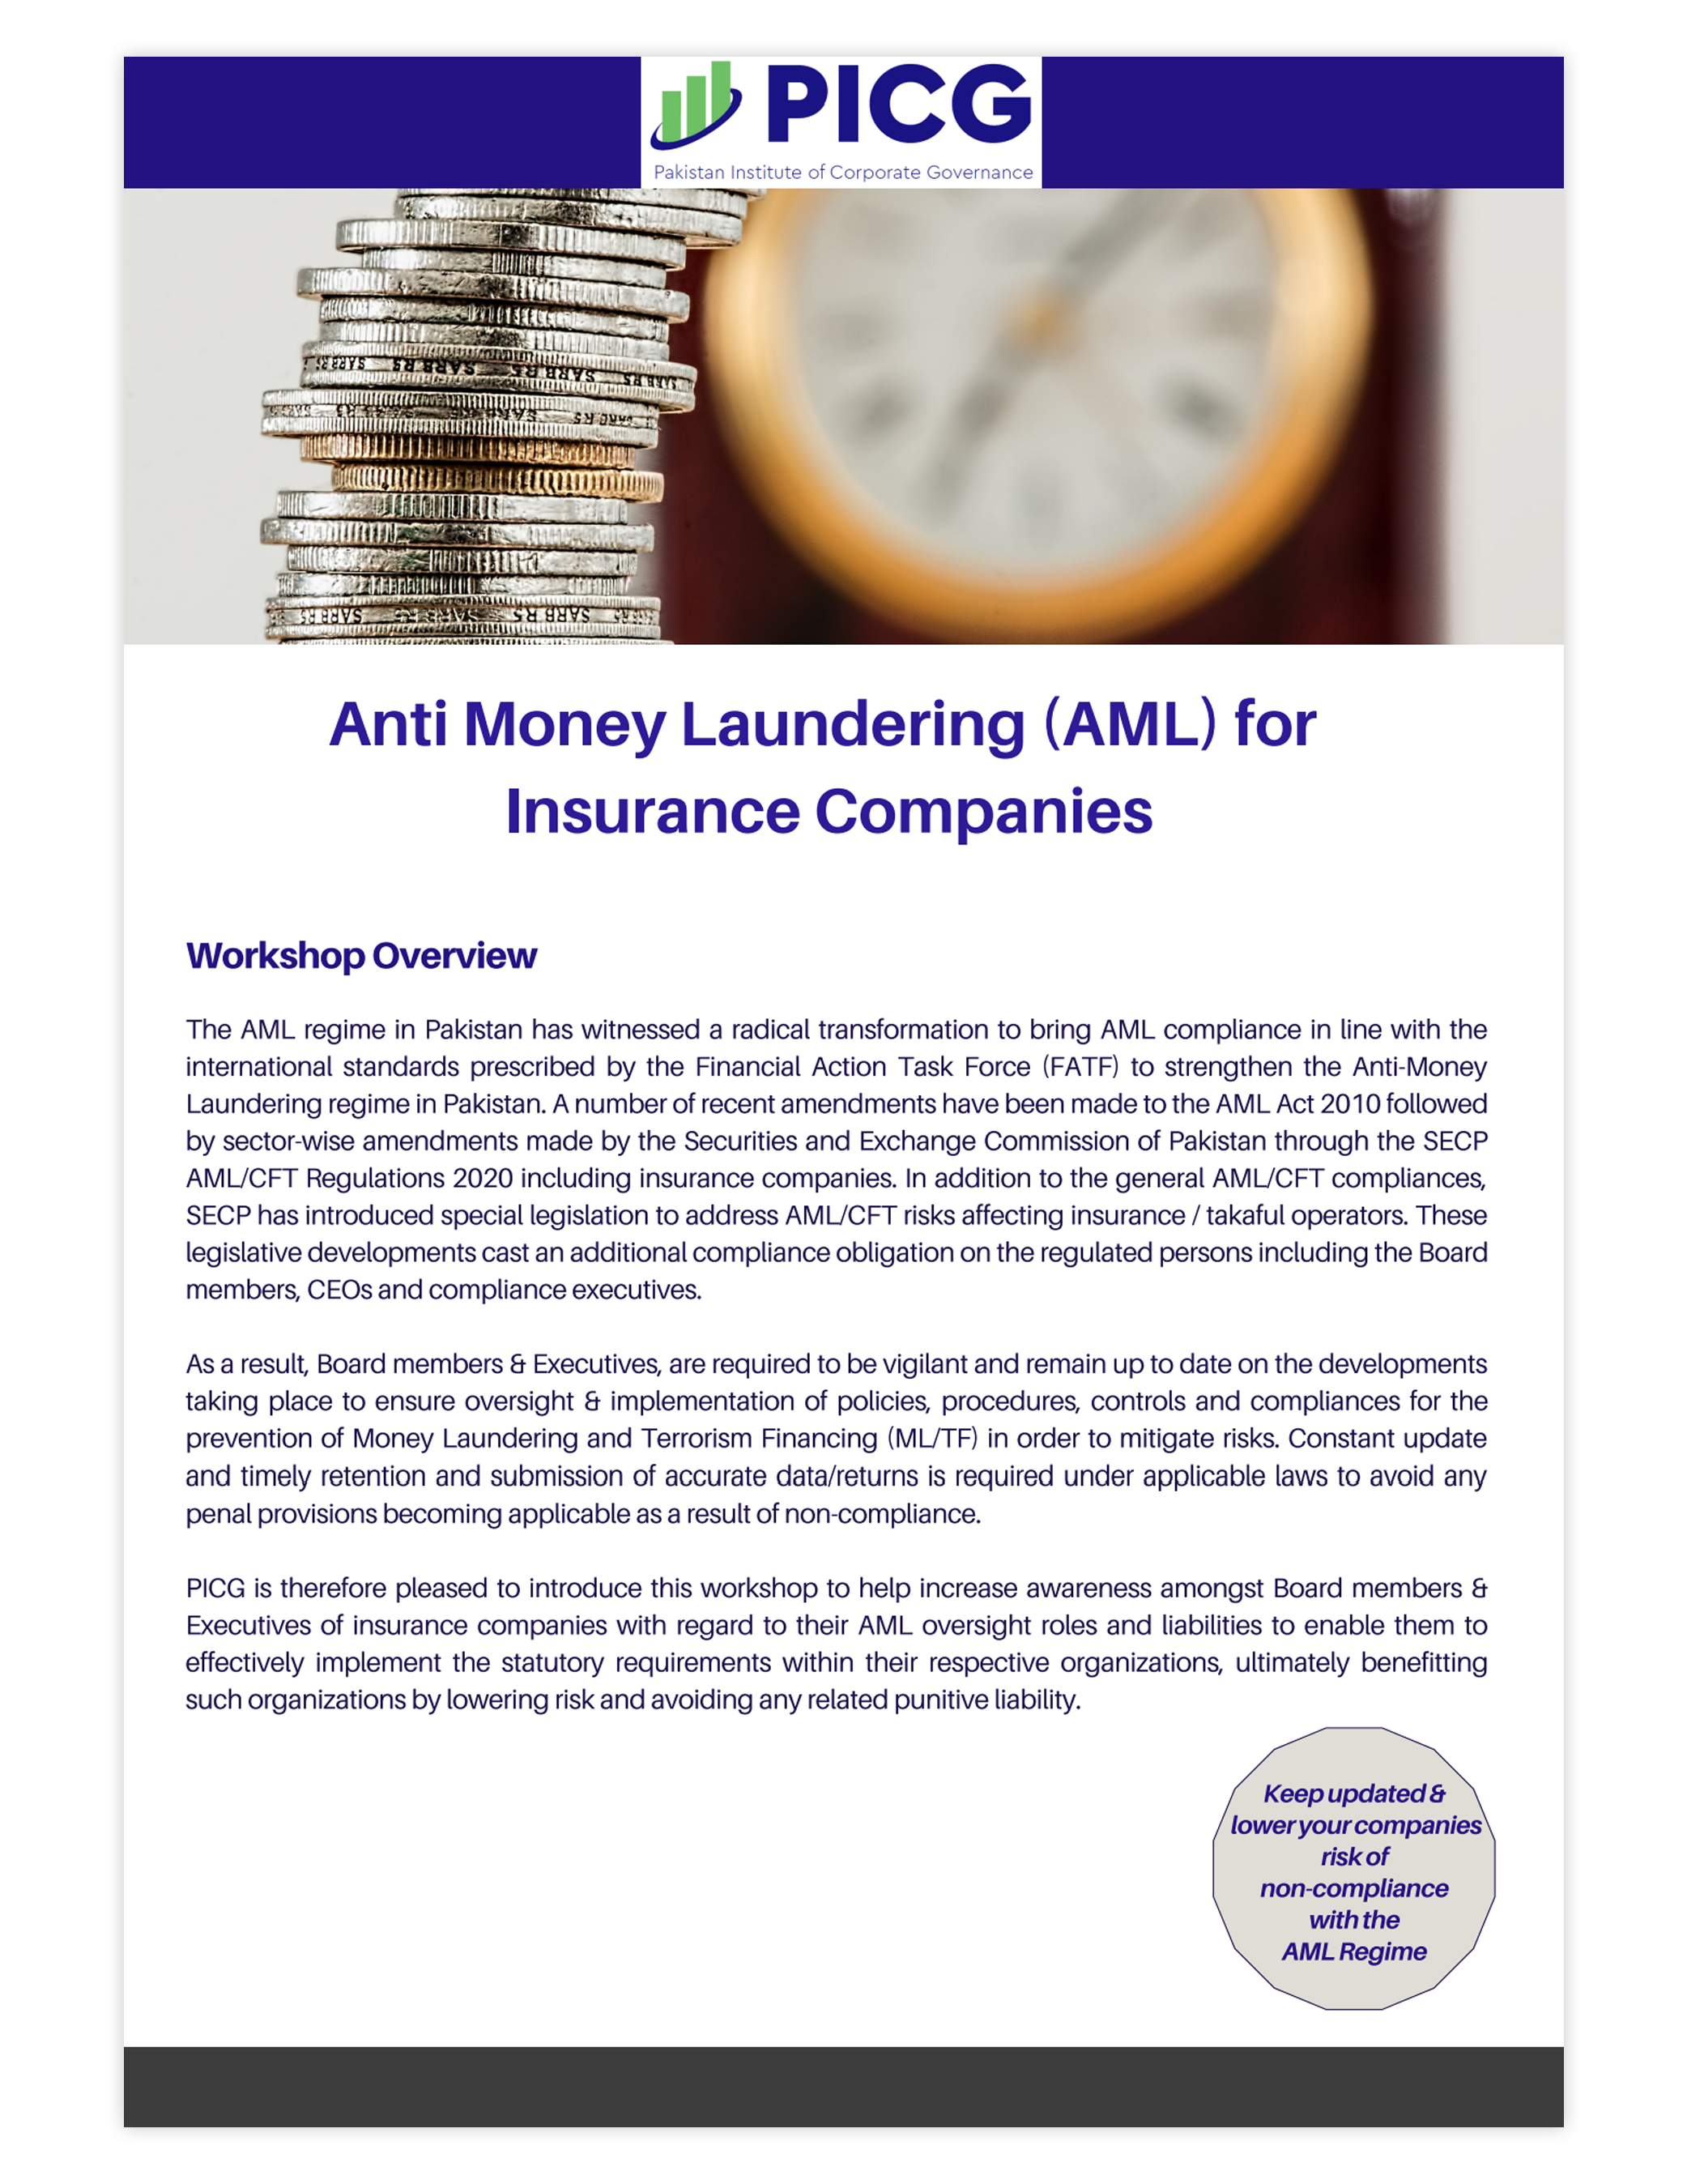 Anti-Money Laundering for Insurance Companies